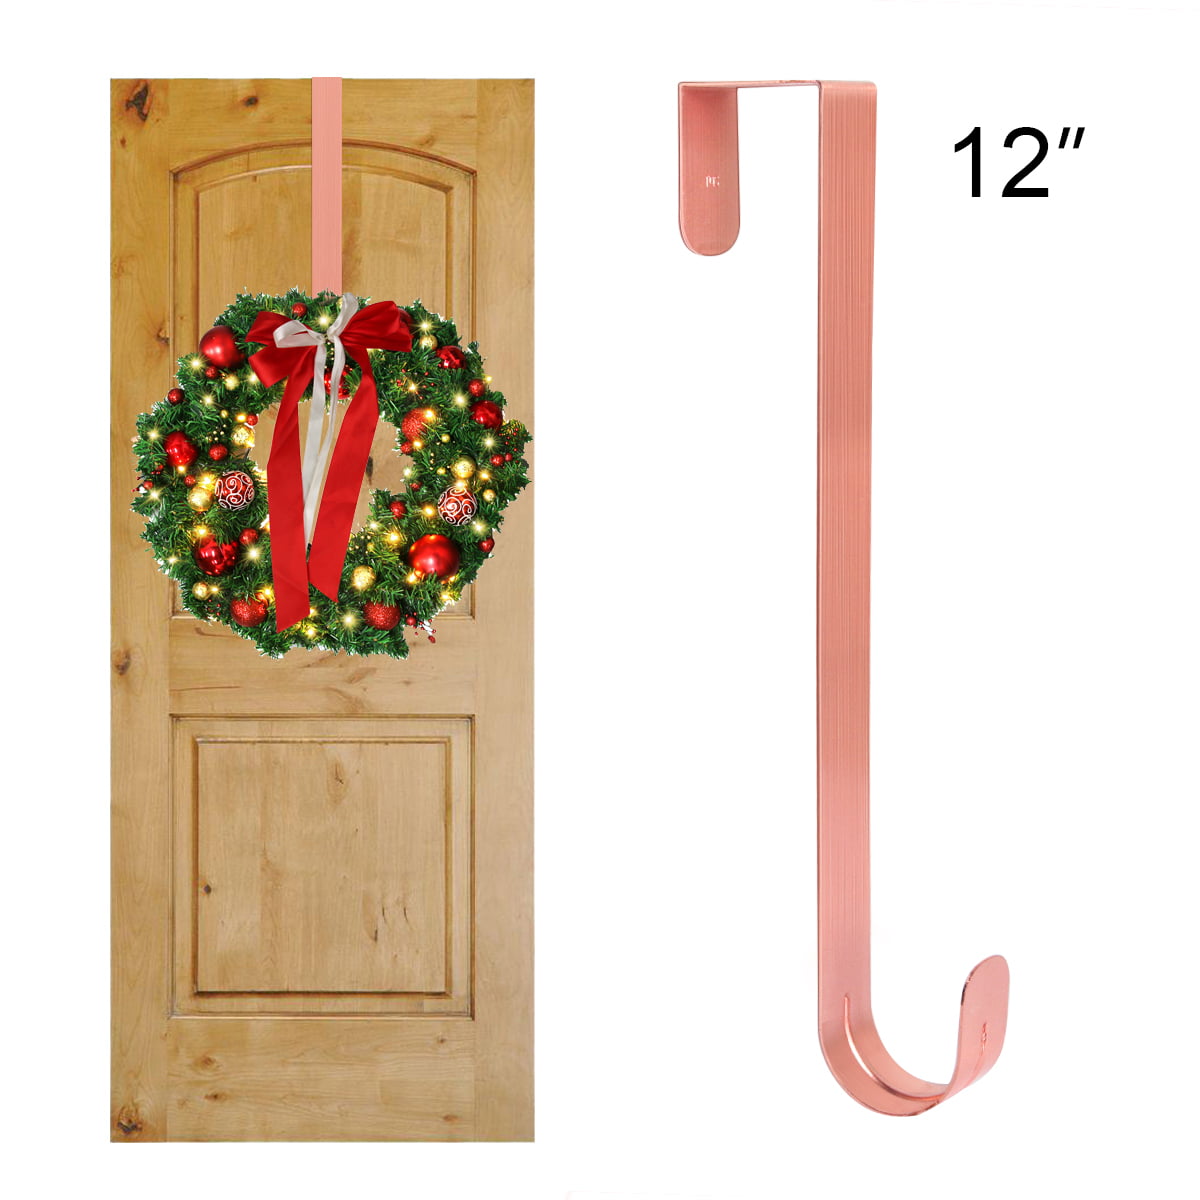 Portable Over the Door Wreath Holder Metal Hanger Hook Rack for Christmas Decor 